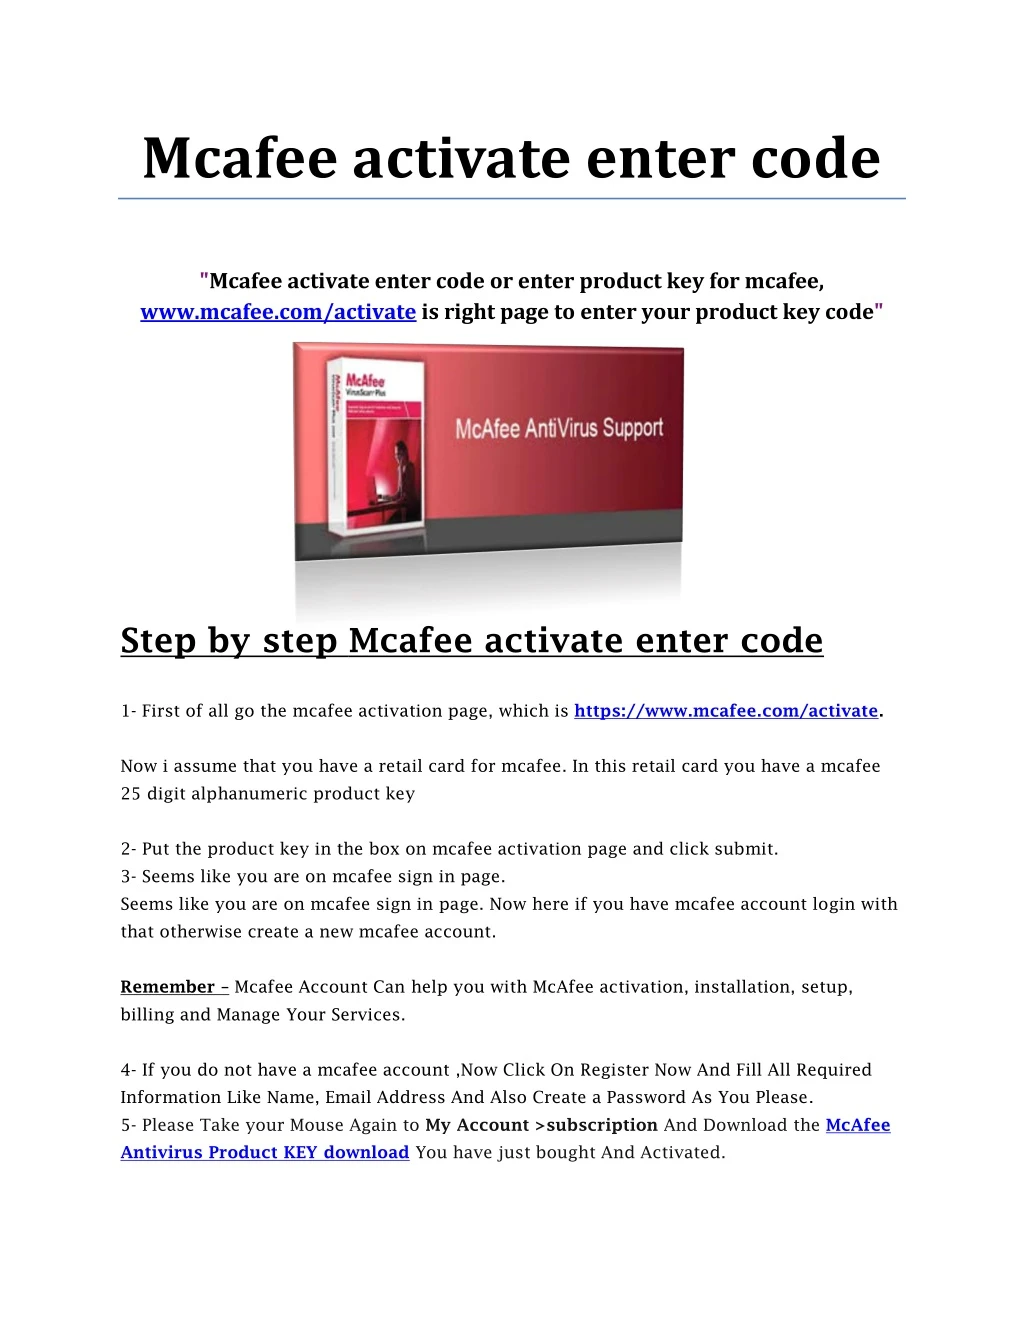 waltr activation code